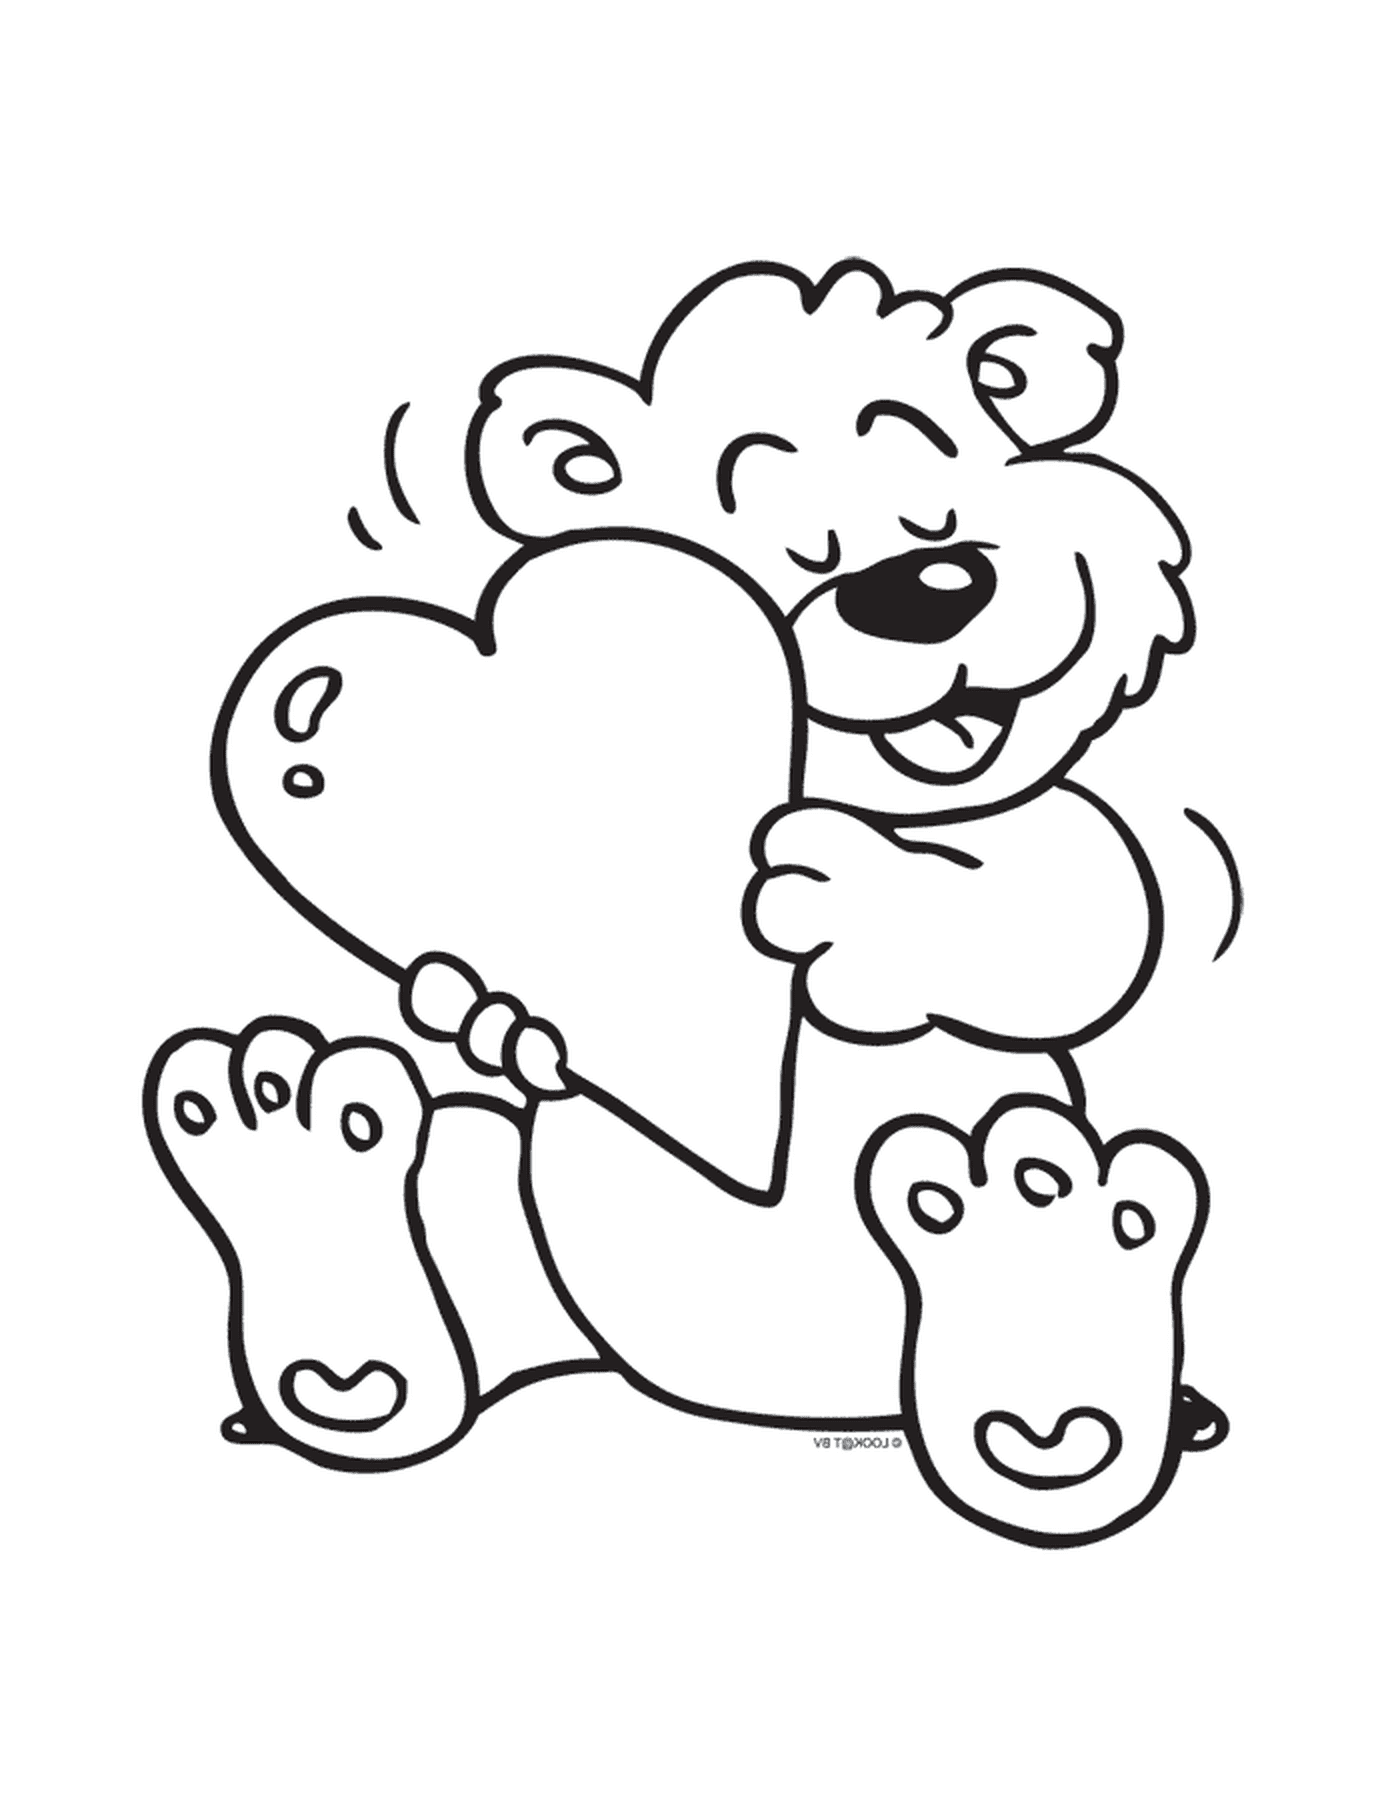  A bear holding a heart 